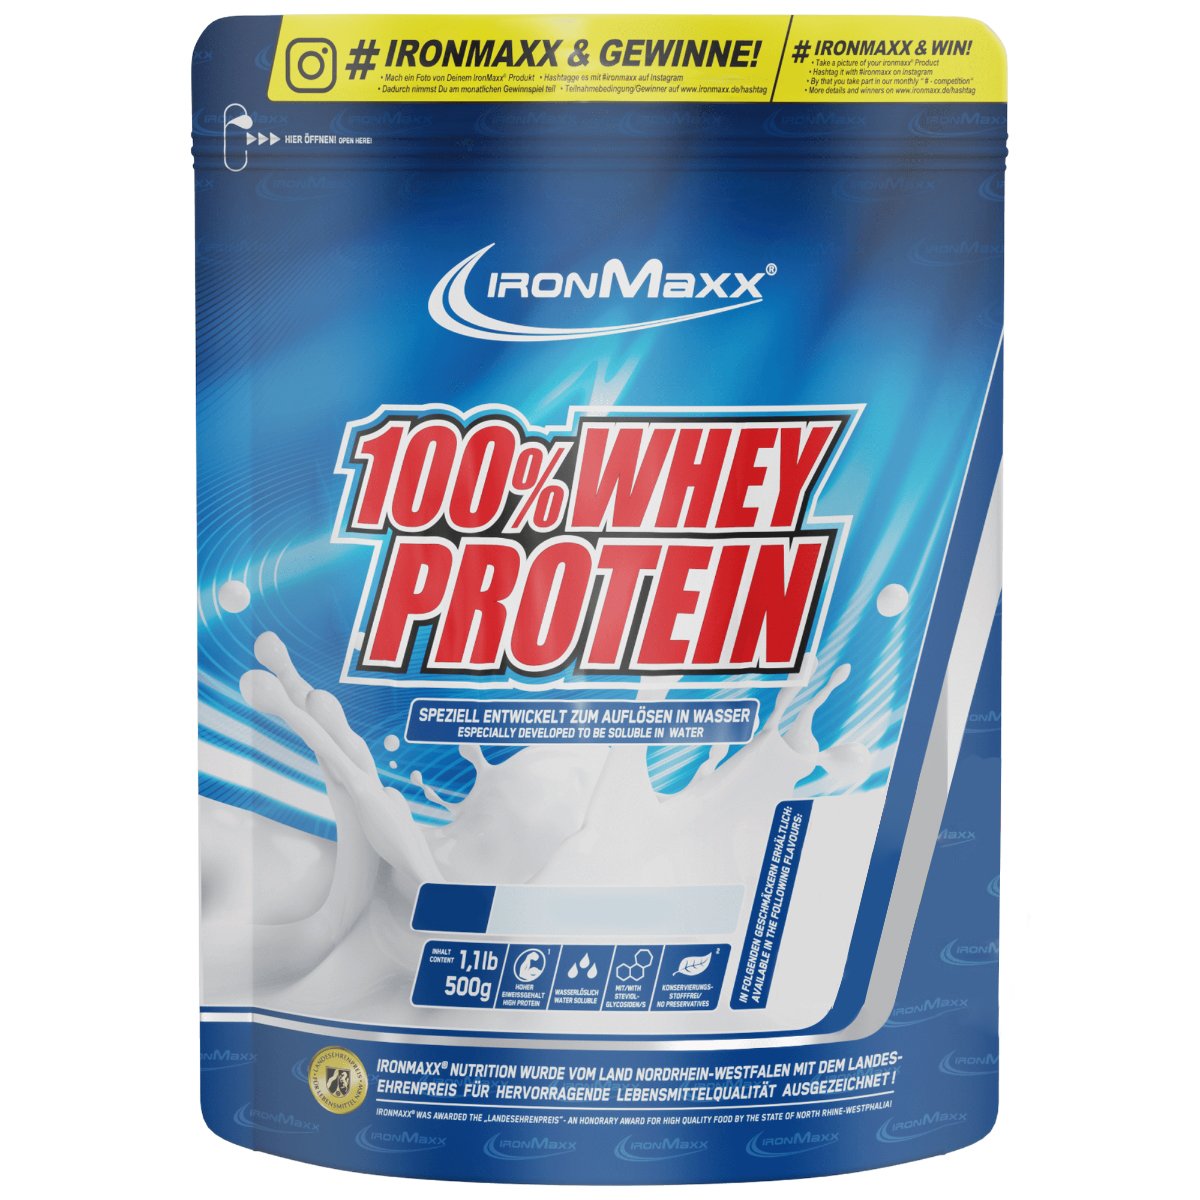 Протеин Ironmaxx 100% Whey Protein, 500 грамм Фисташка-кокос,  мл, IronMaxx. Протеин. Набор массы Восстановление Антикатаболические свойства 